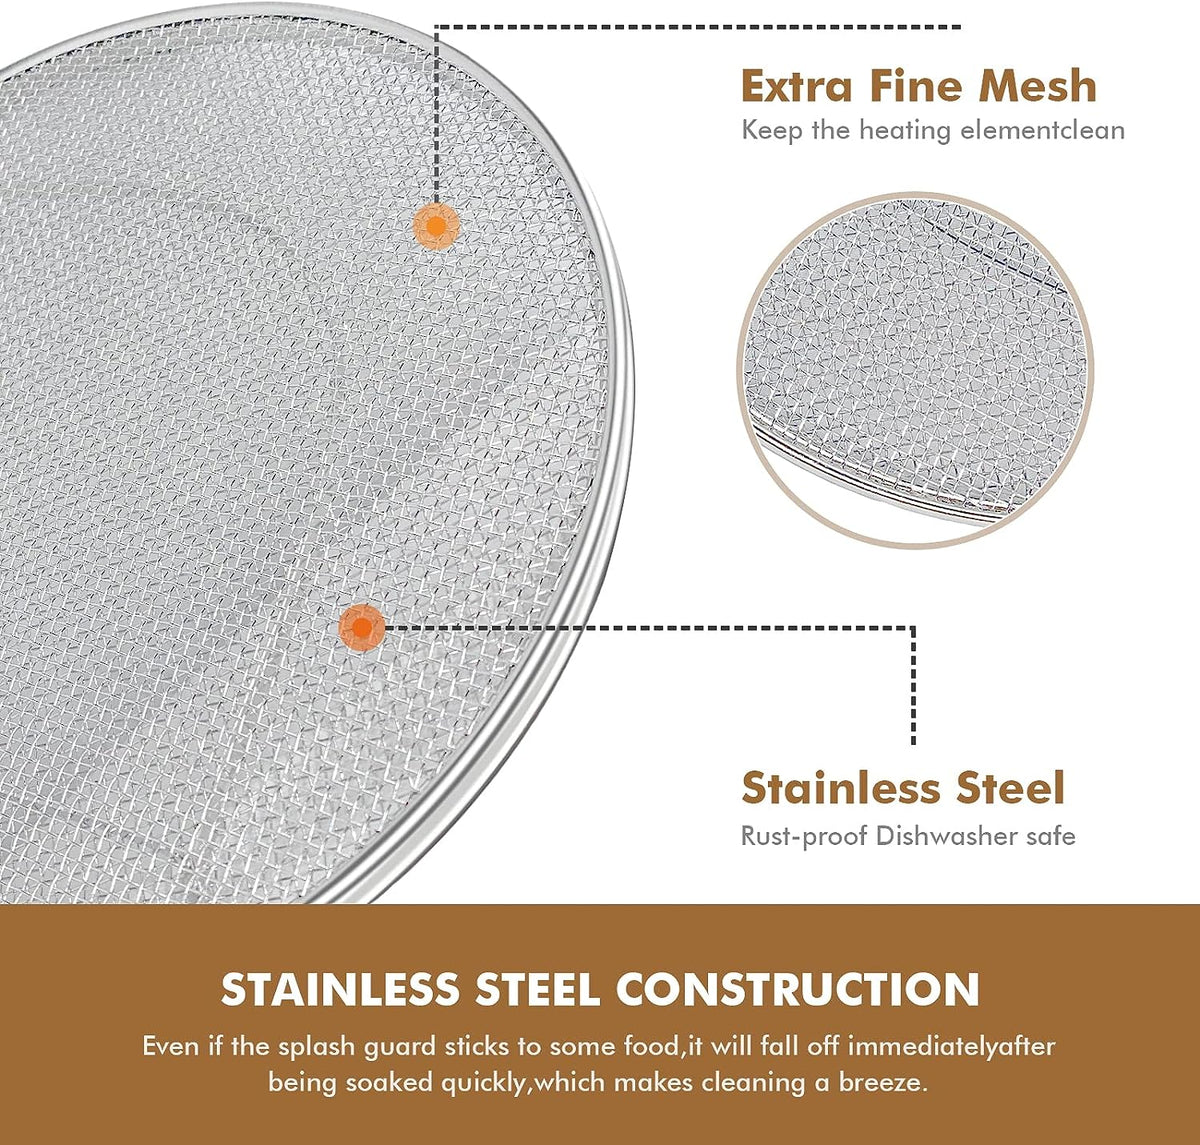 Stainless Steel Splatter Shield for Ninja Foodi Air Fryer Accessories for Ninja  Foodi Indoor Grill Replacement Parts For Ninja - AliExpress